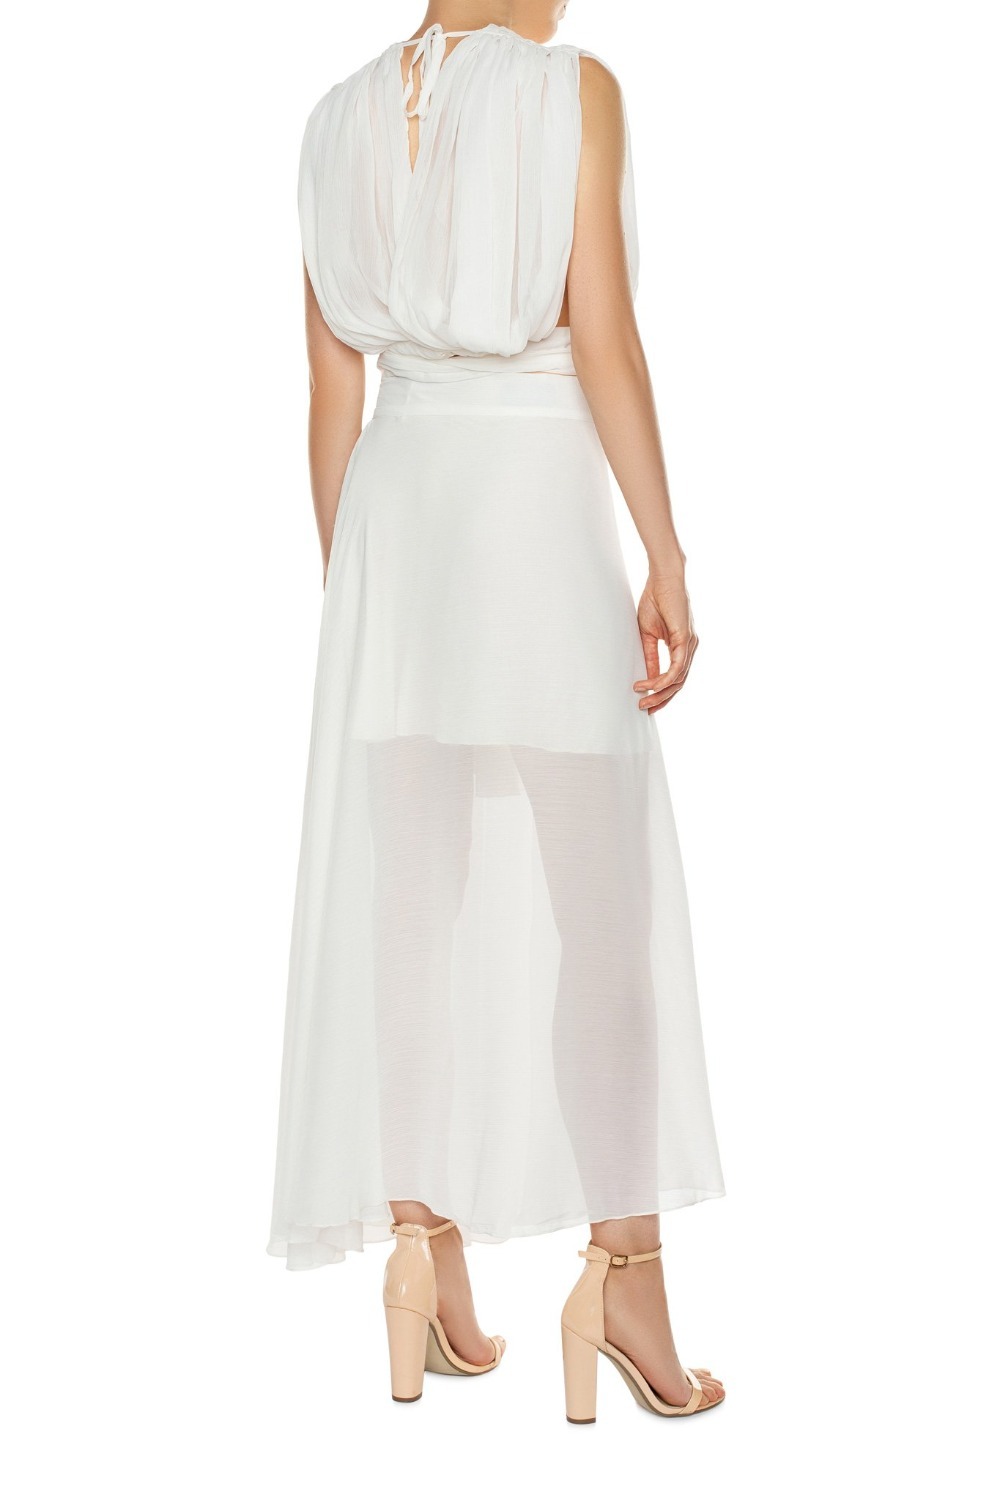 Paradise Crop Top Bustier & Manoa Slit Skirt White Set